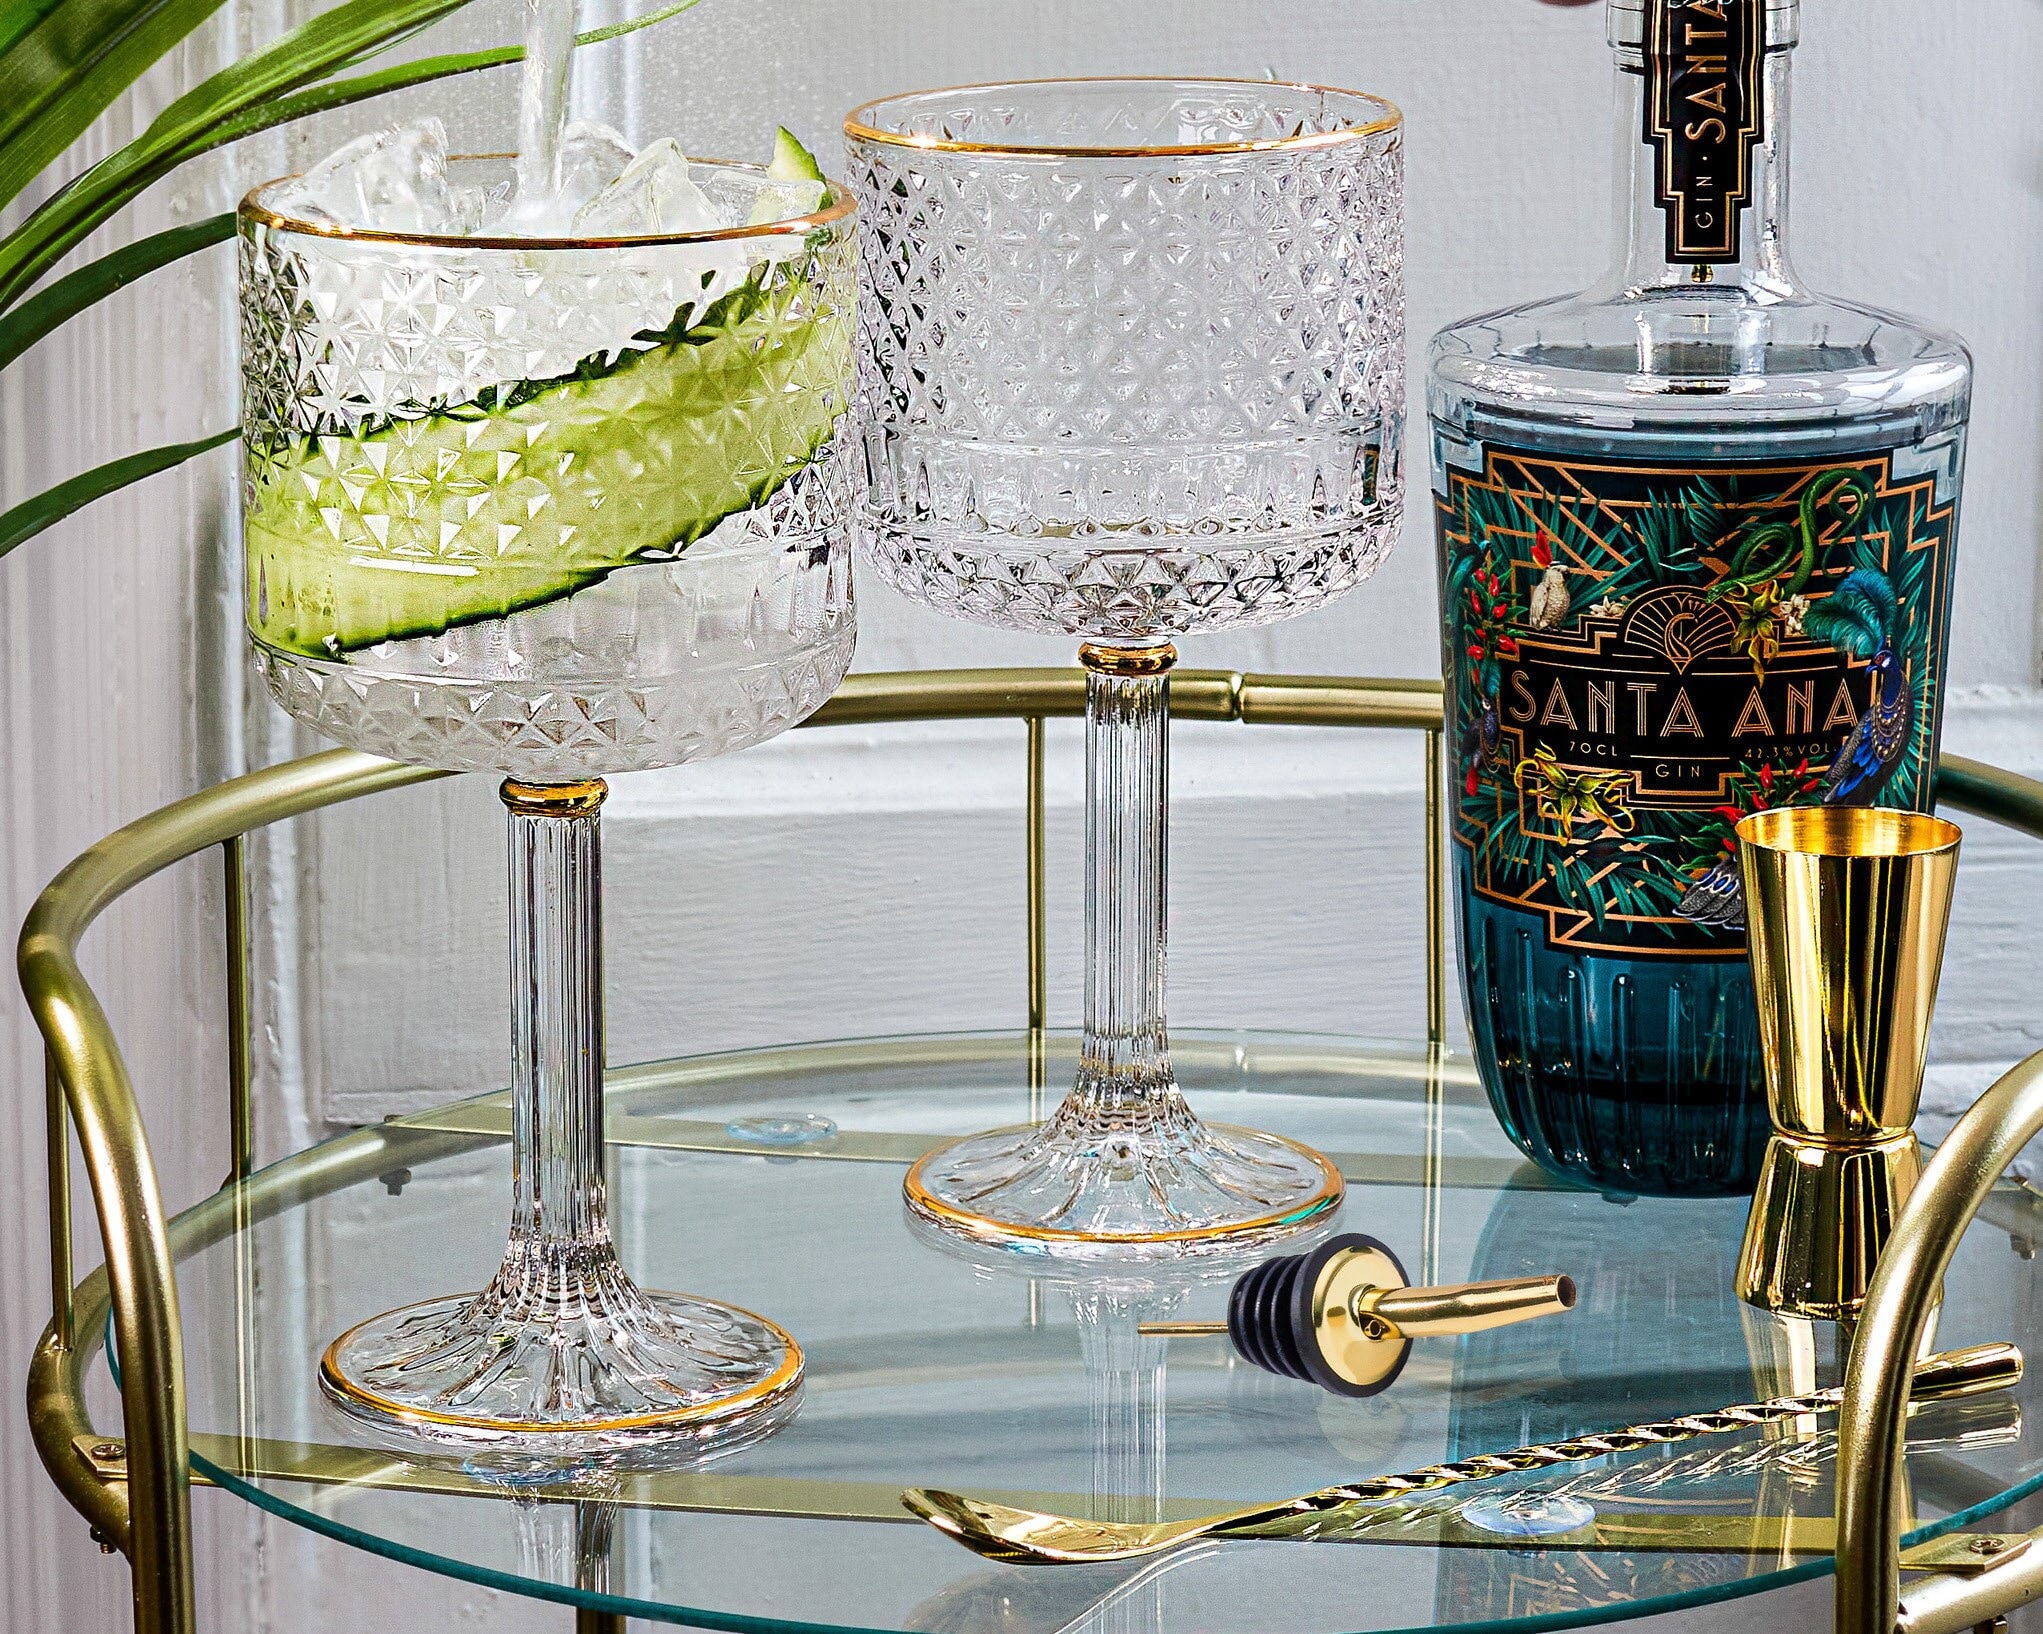 Glassique Cadeau Venice Goblet Cocktail Glasses for Gin Tonic, Aperol Spritz,Sangria | Modern Glassware Collection | Set of 4 | 17 oz Light